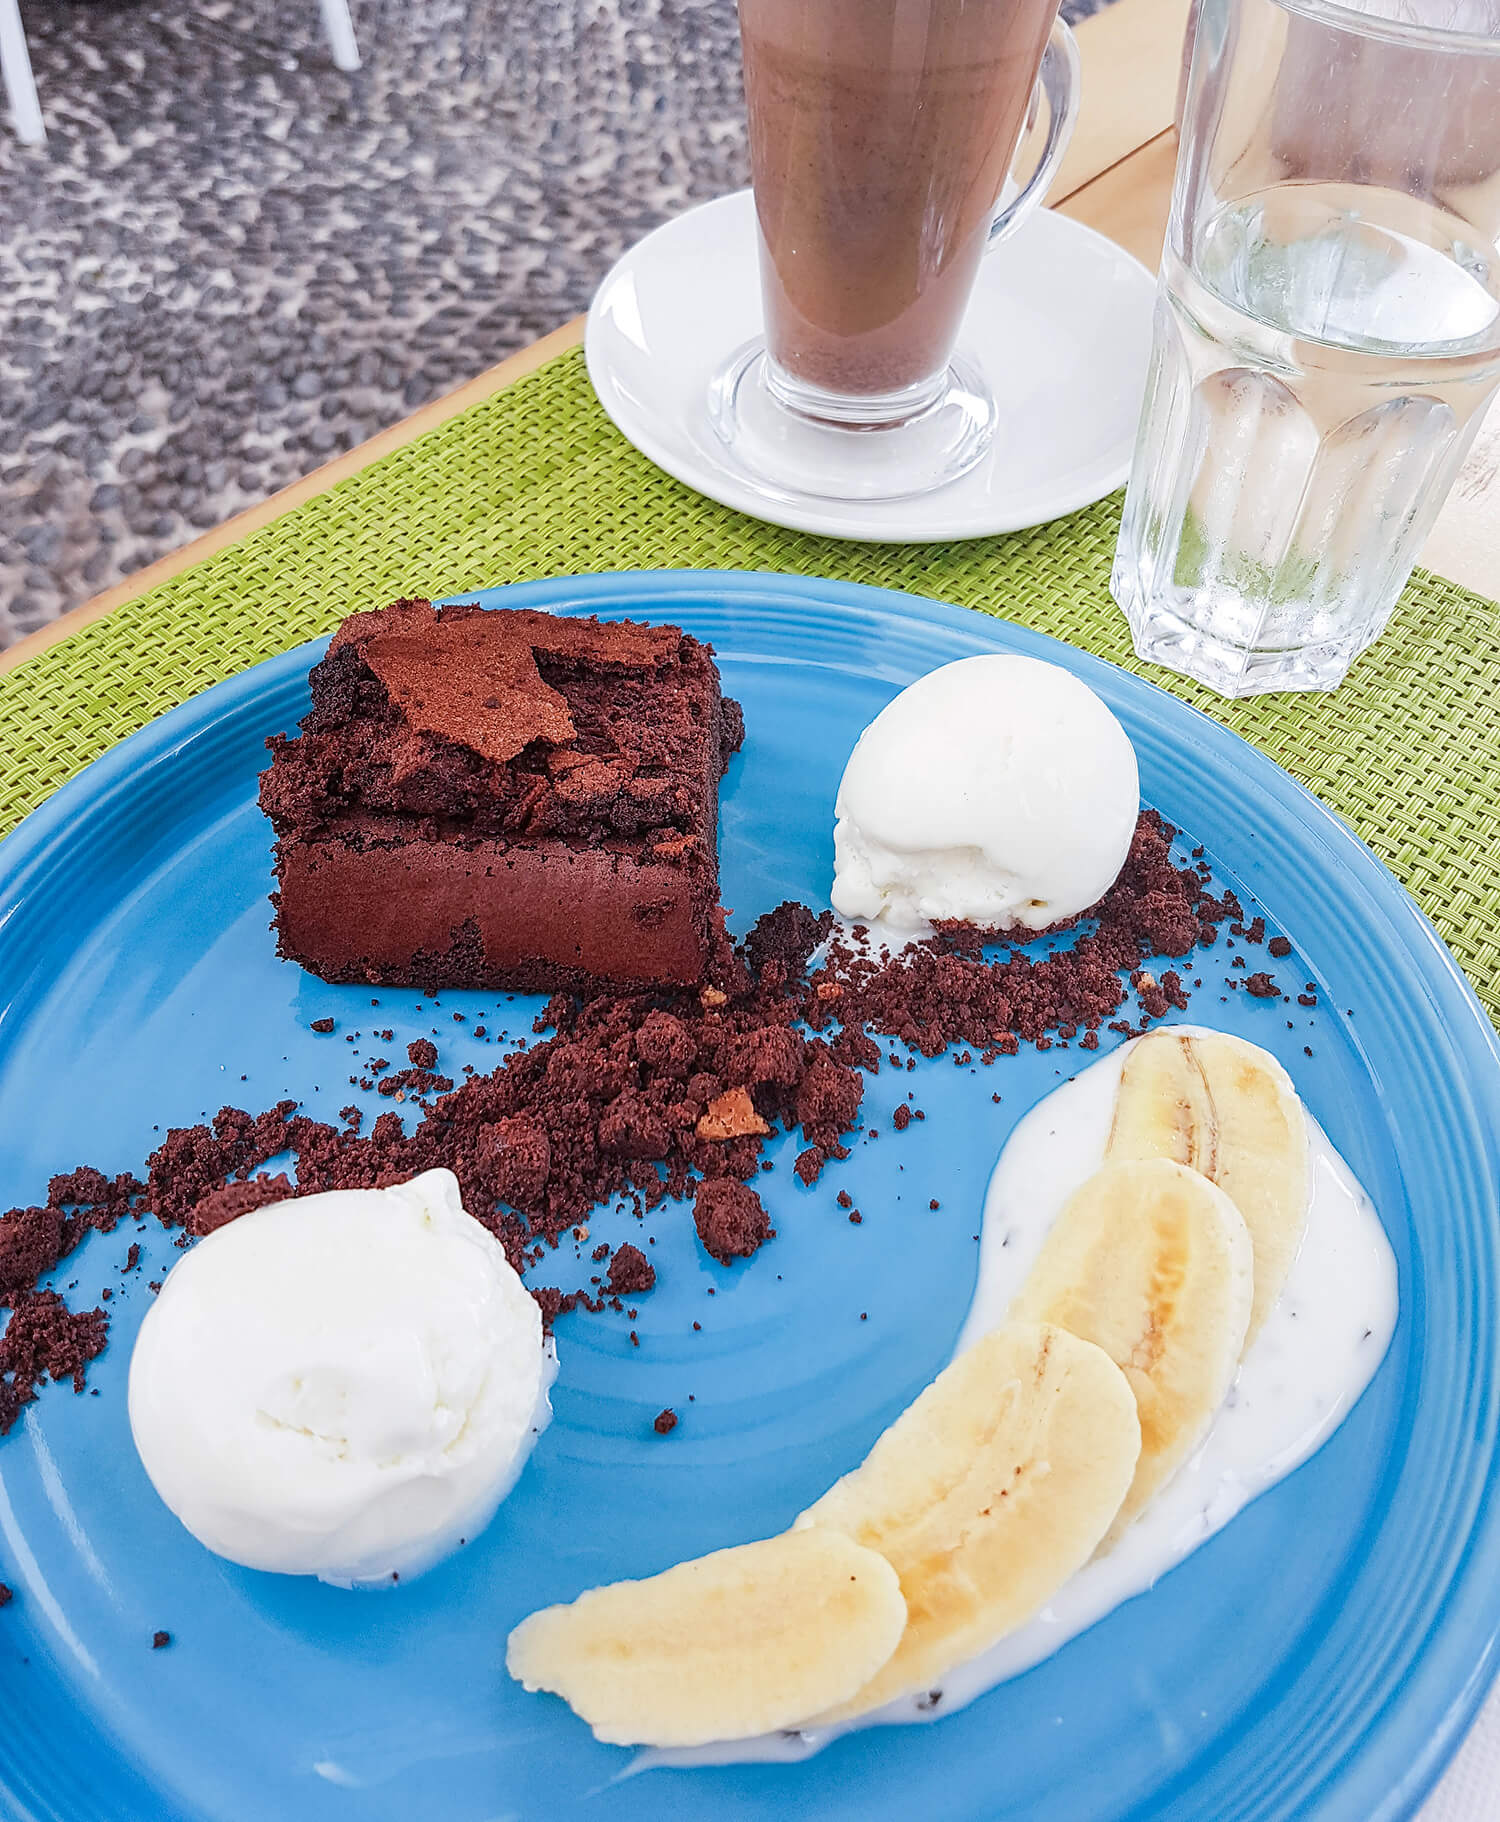 Kationette-lifestyleblogger-nrw-Food-Restaurant-tips-for-Funchal-on-Madeira-Island